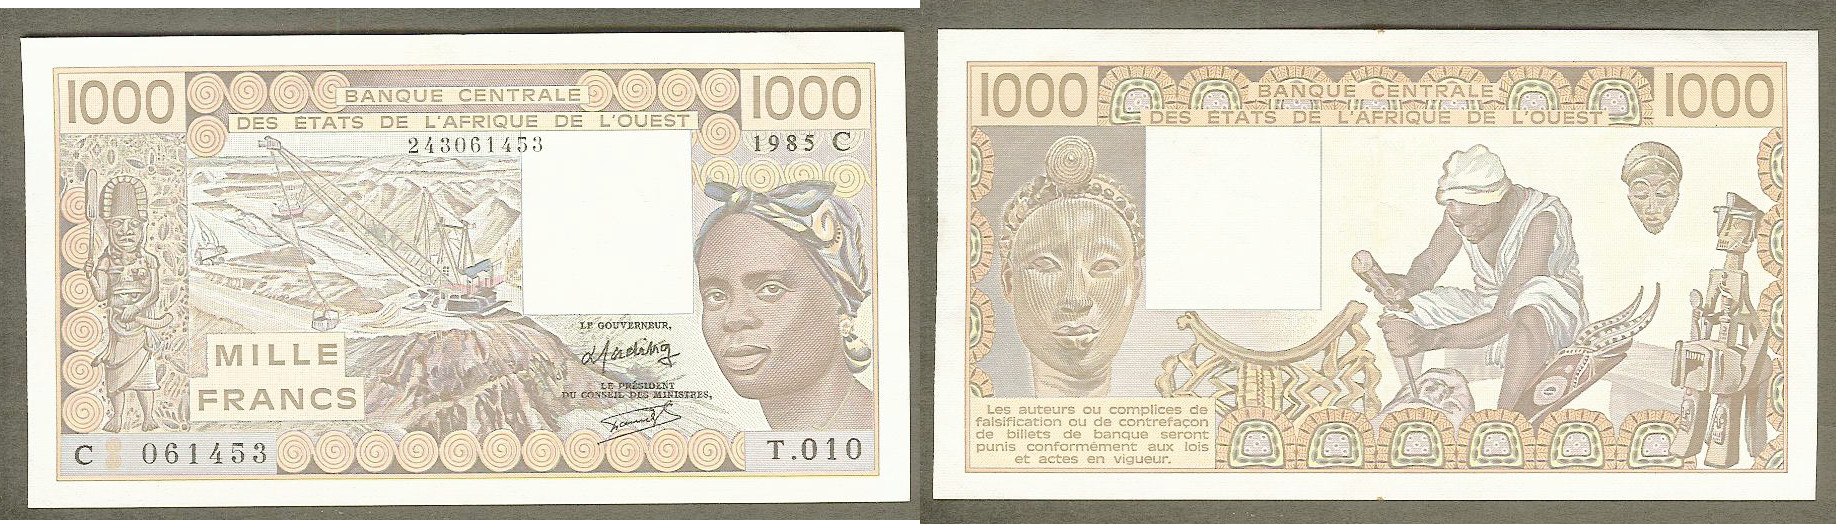 ETATS DE L'AFRIQUE DE L'OUEST 1000 FRANCS - 1985 SPL-